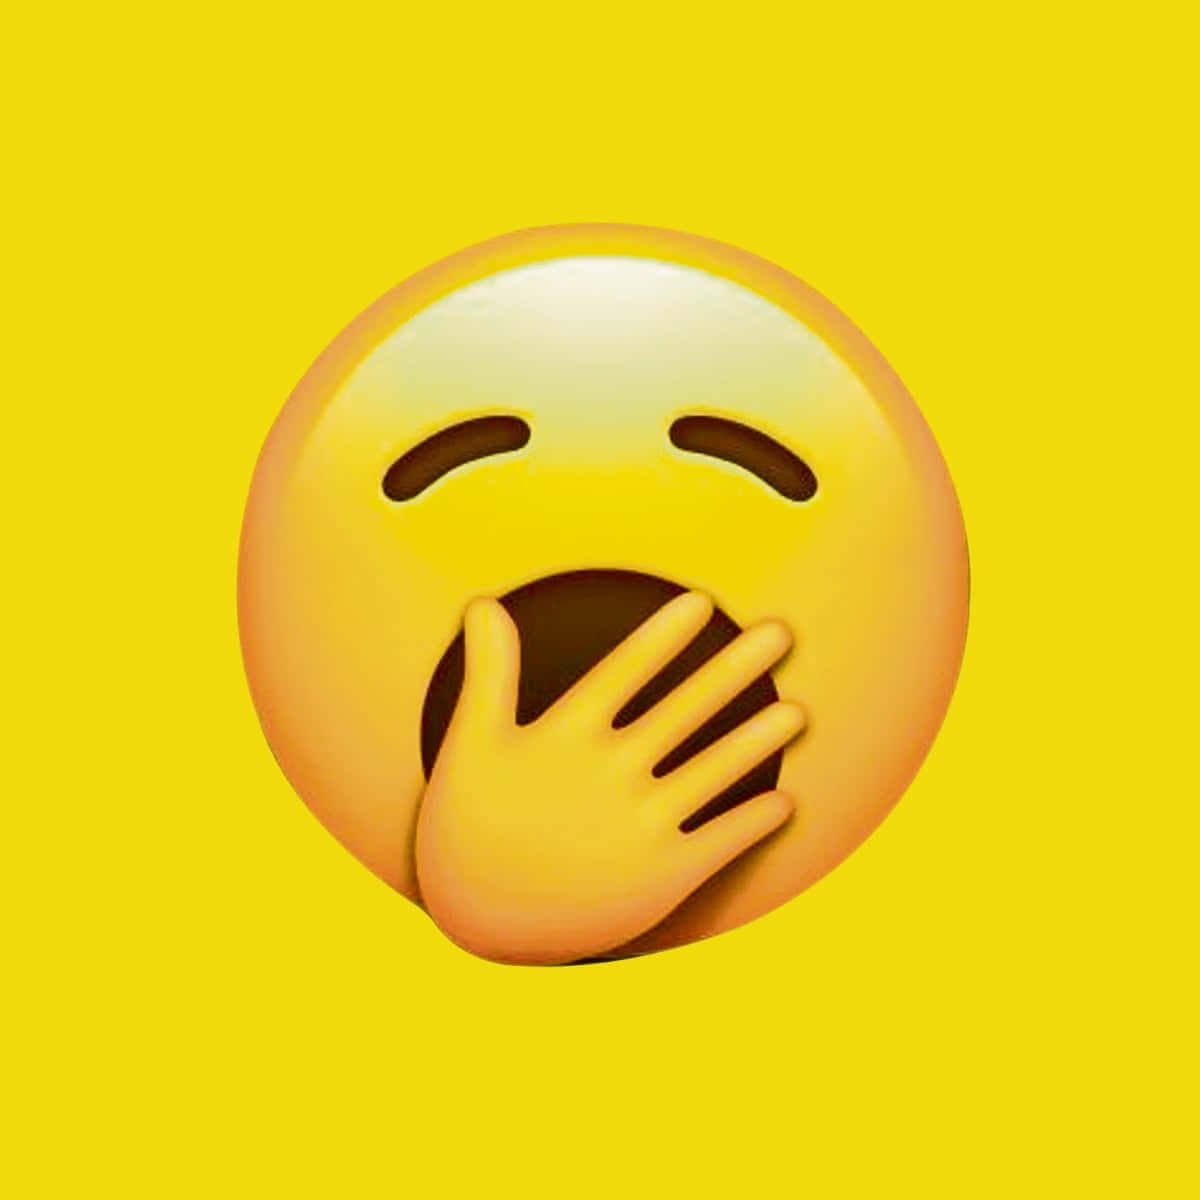 Yawning Emoji On Yellow Picture